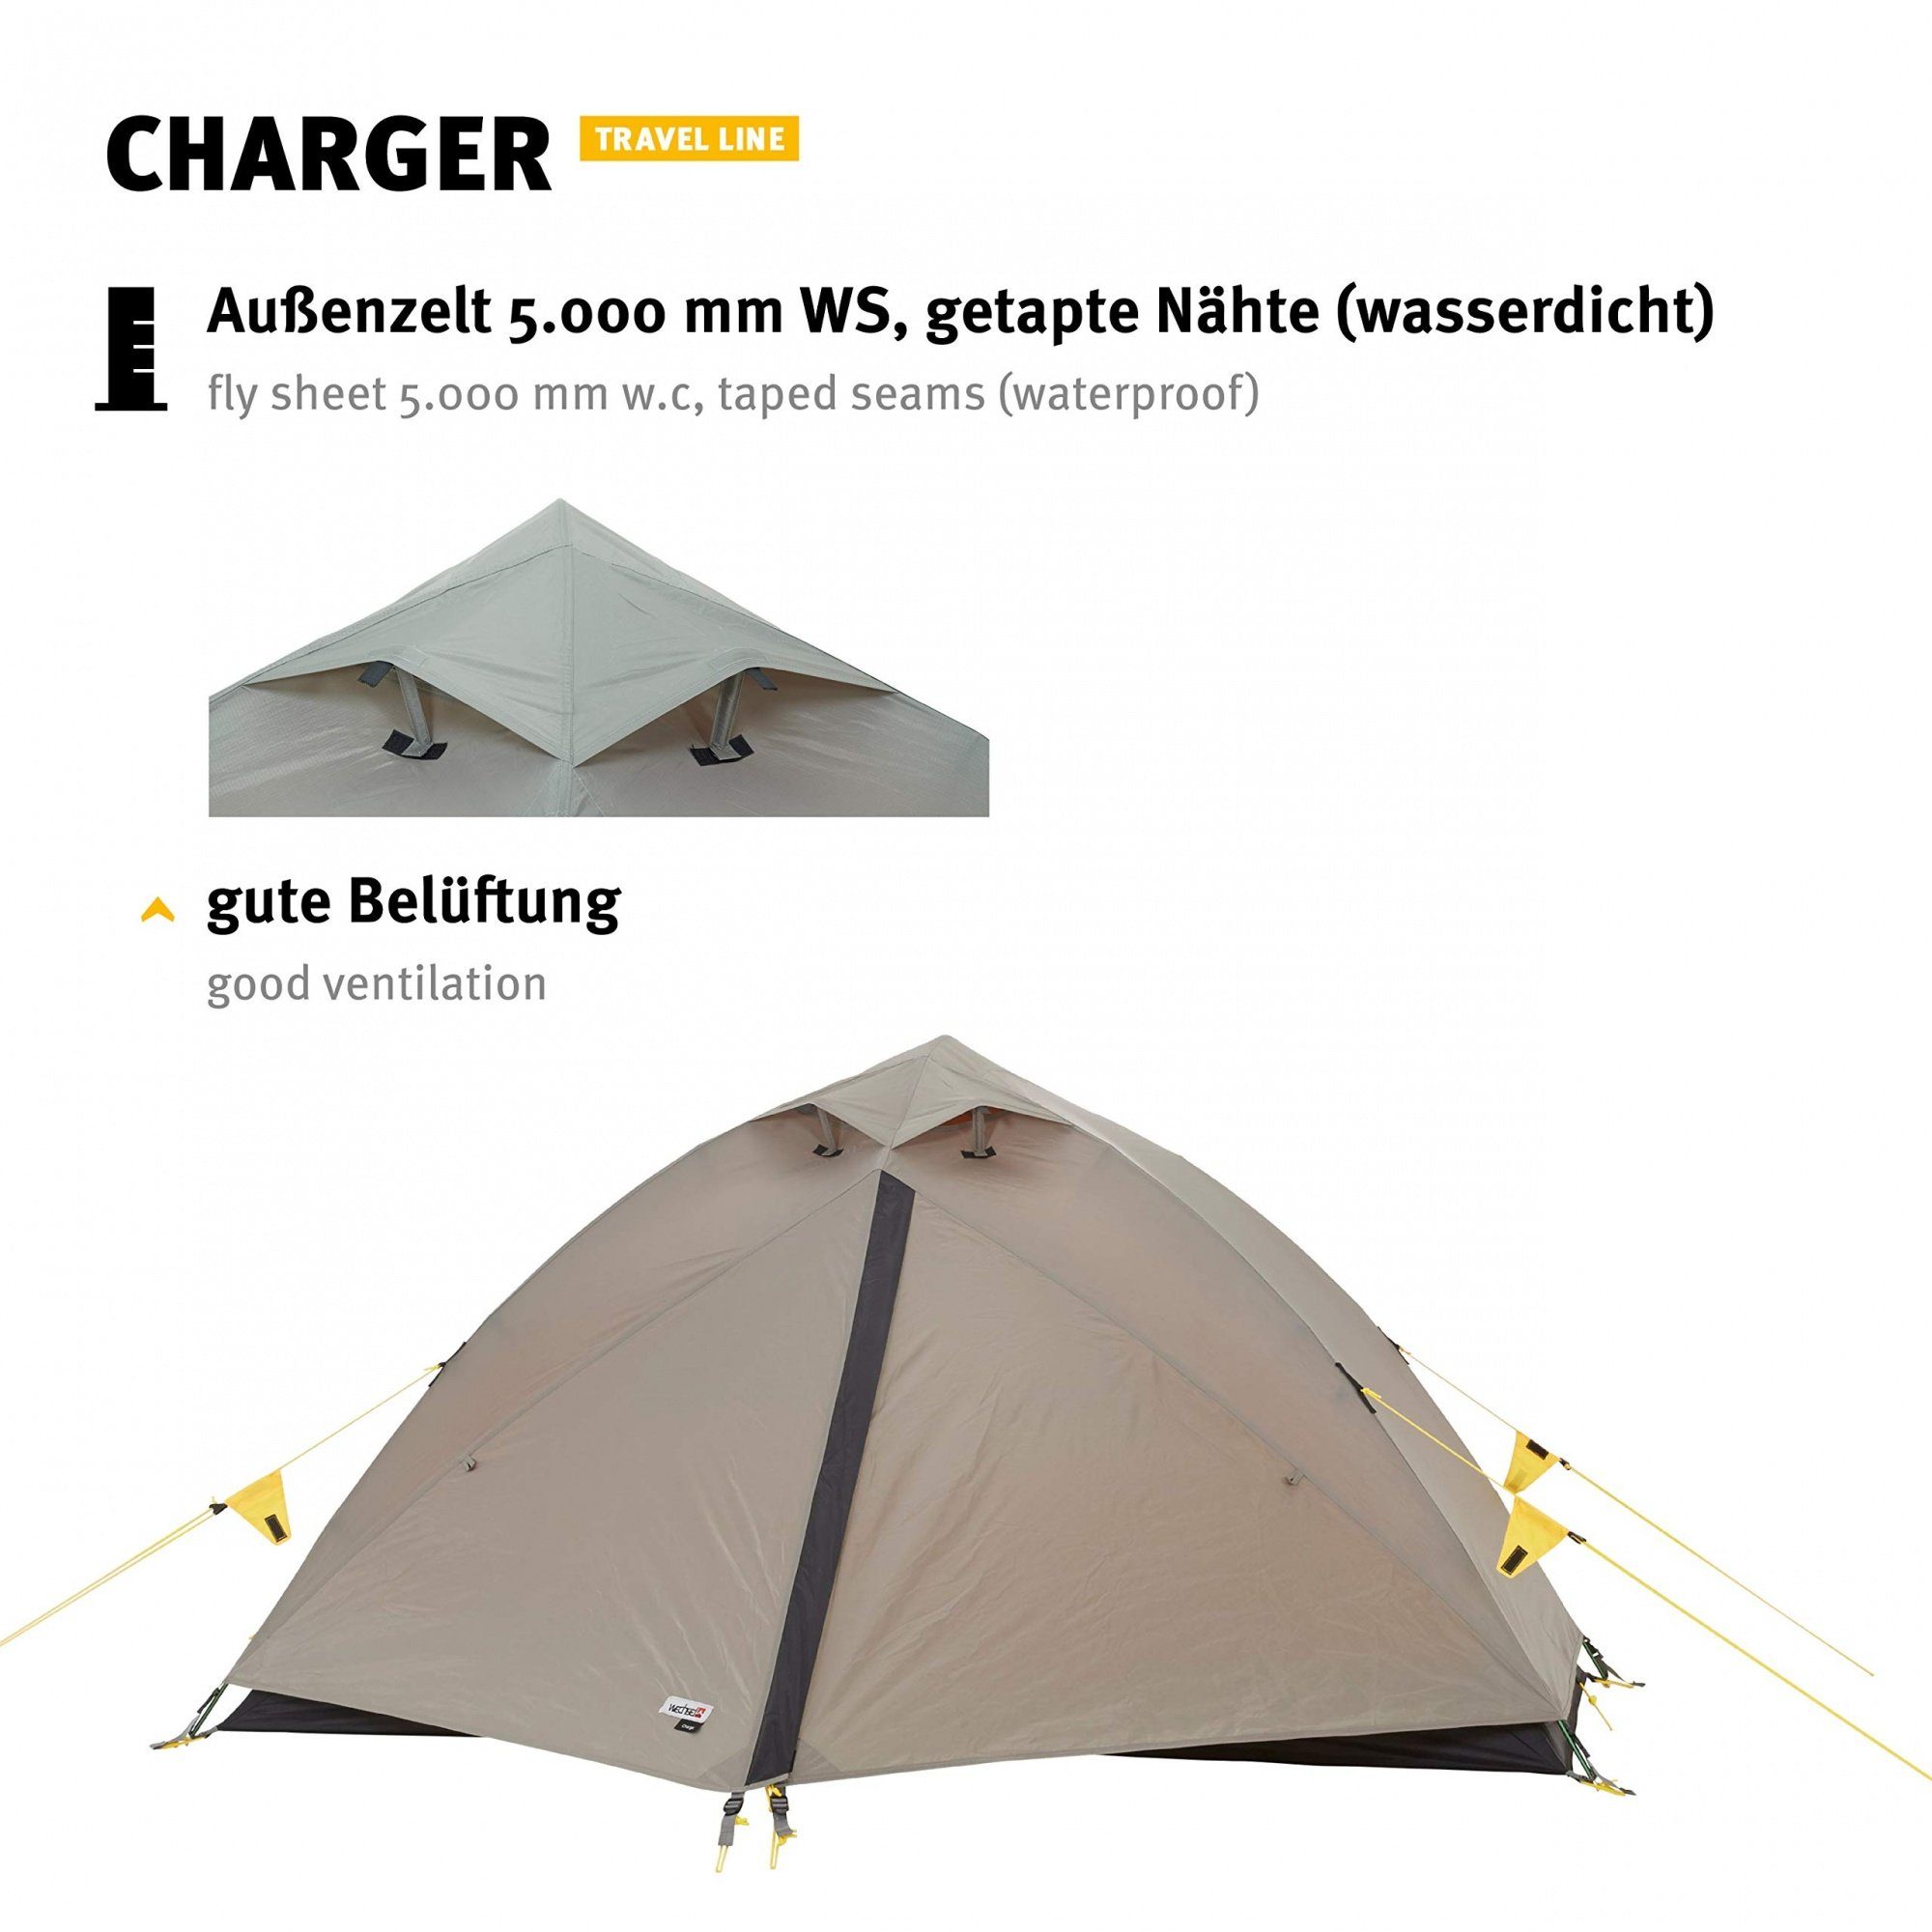 Tents Kuppelzelt 2 - Personen: Kuppelzelt Travel Charger Line Vielseitiges Zelt, Geodät 2-Personen Wechsel -